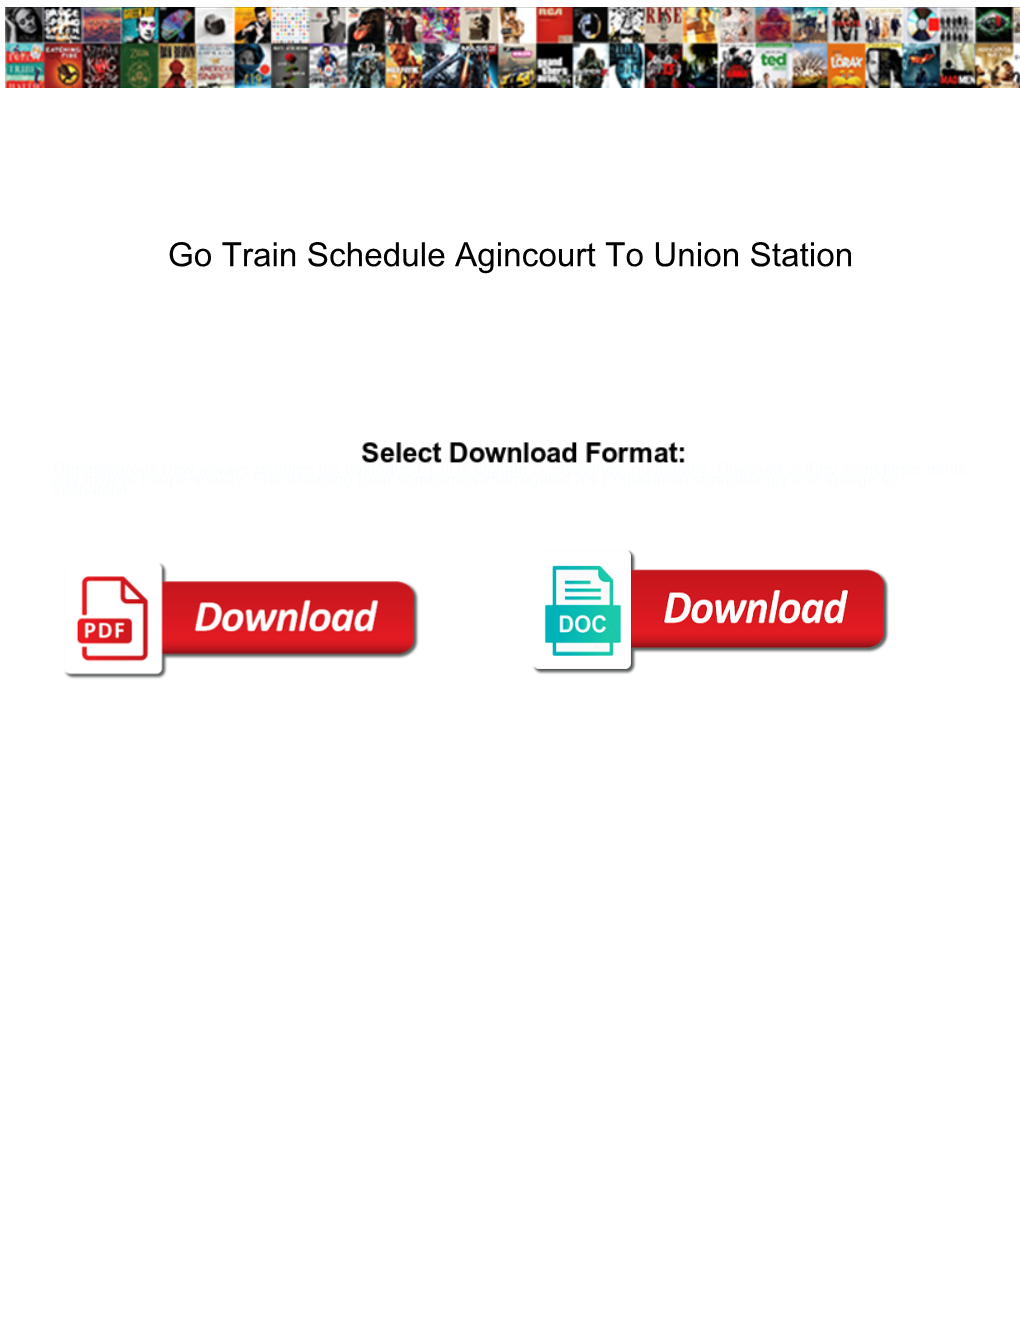 Go Train Schedule Agincourt to Union Station